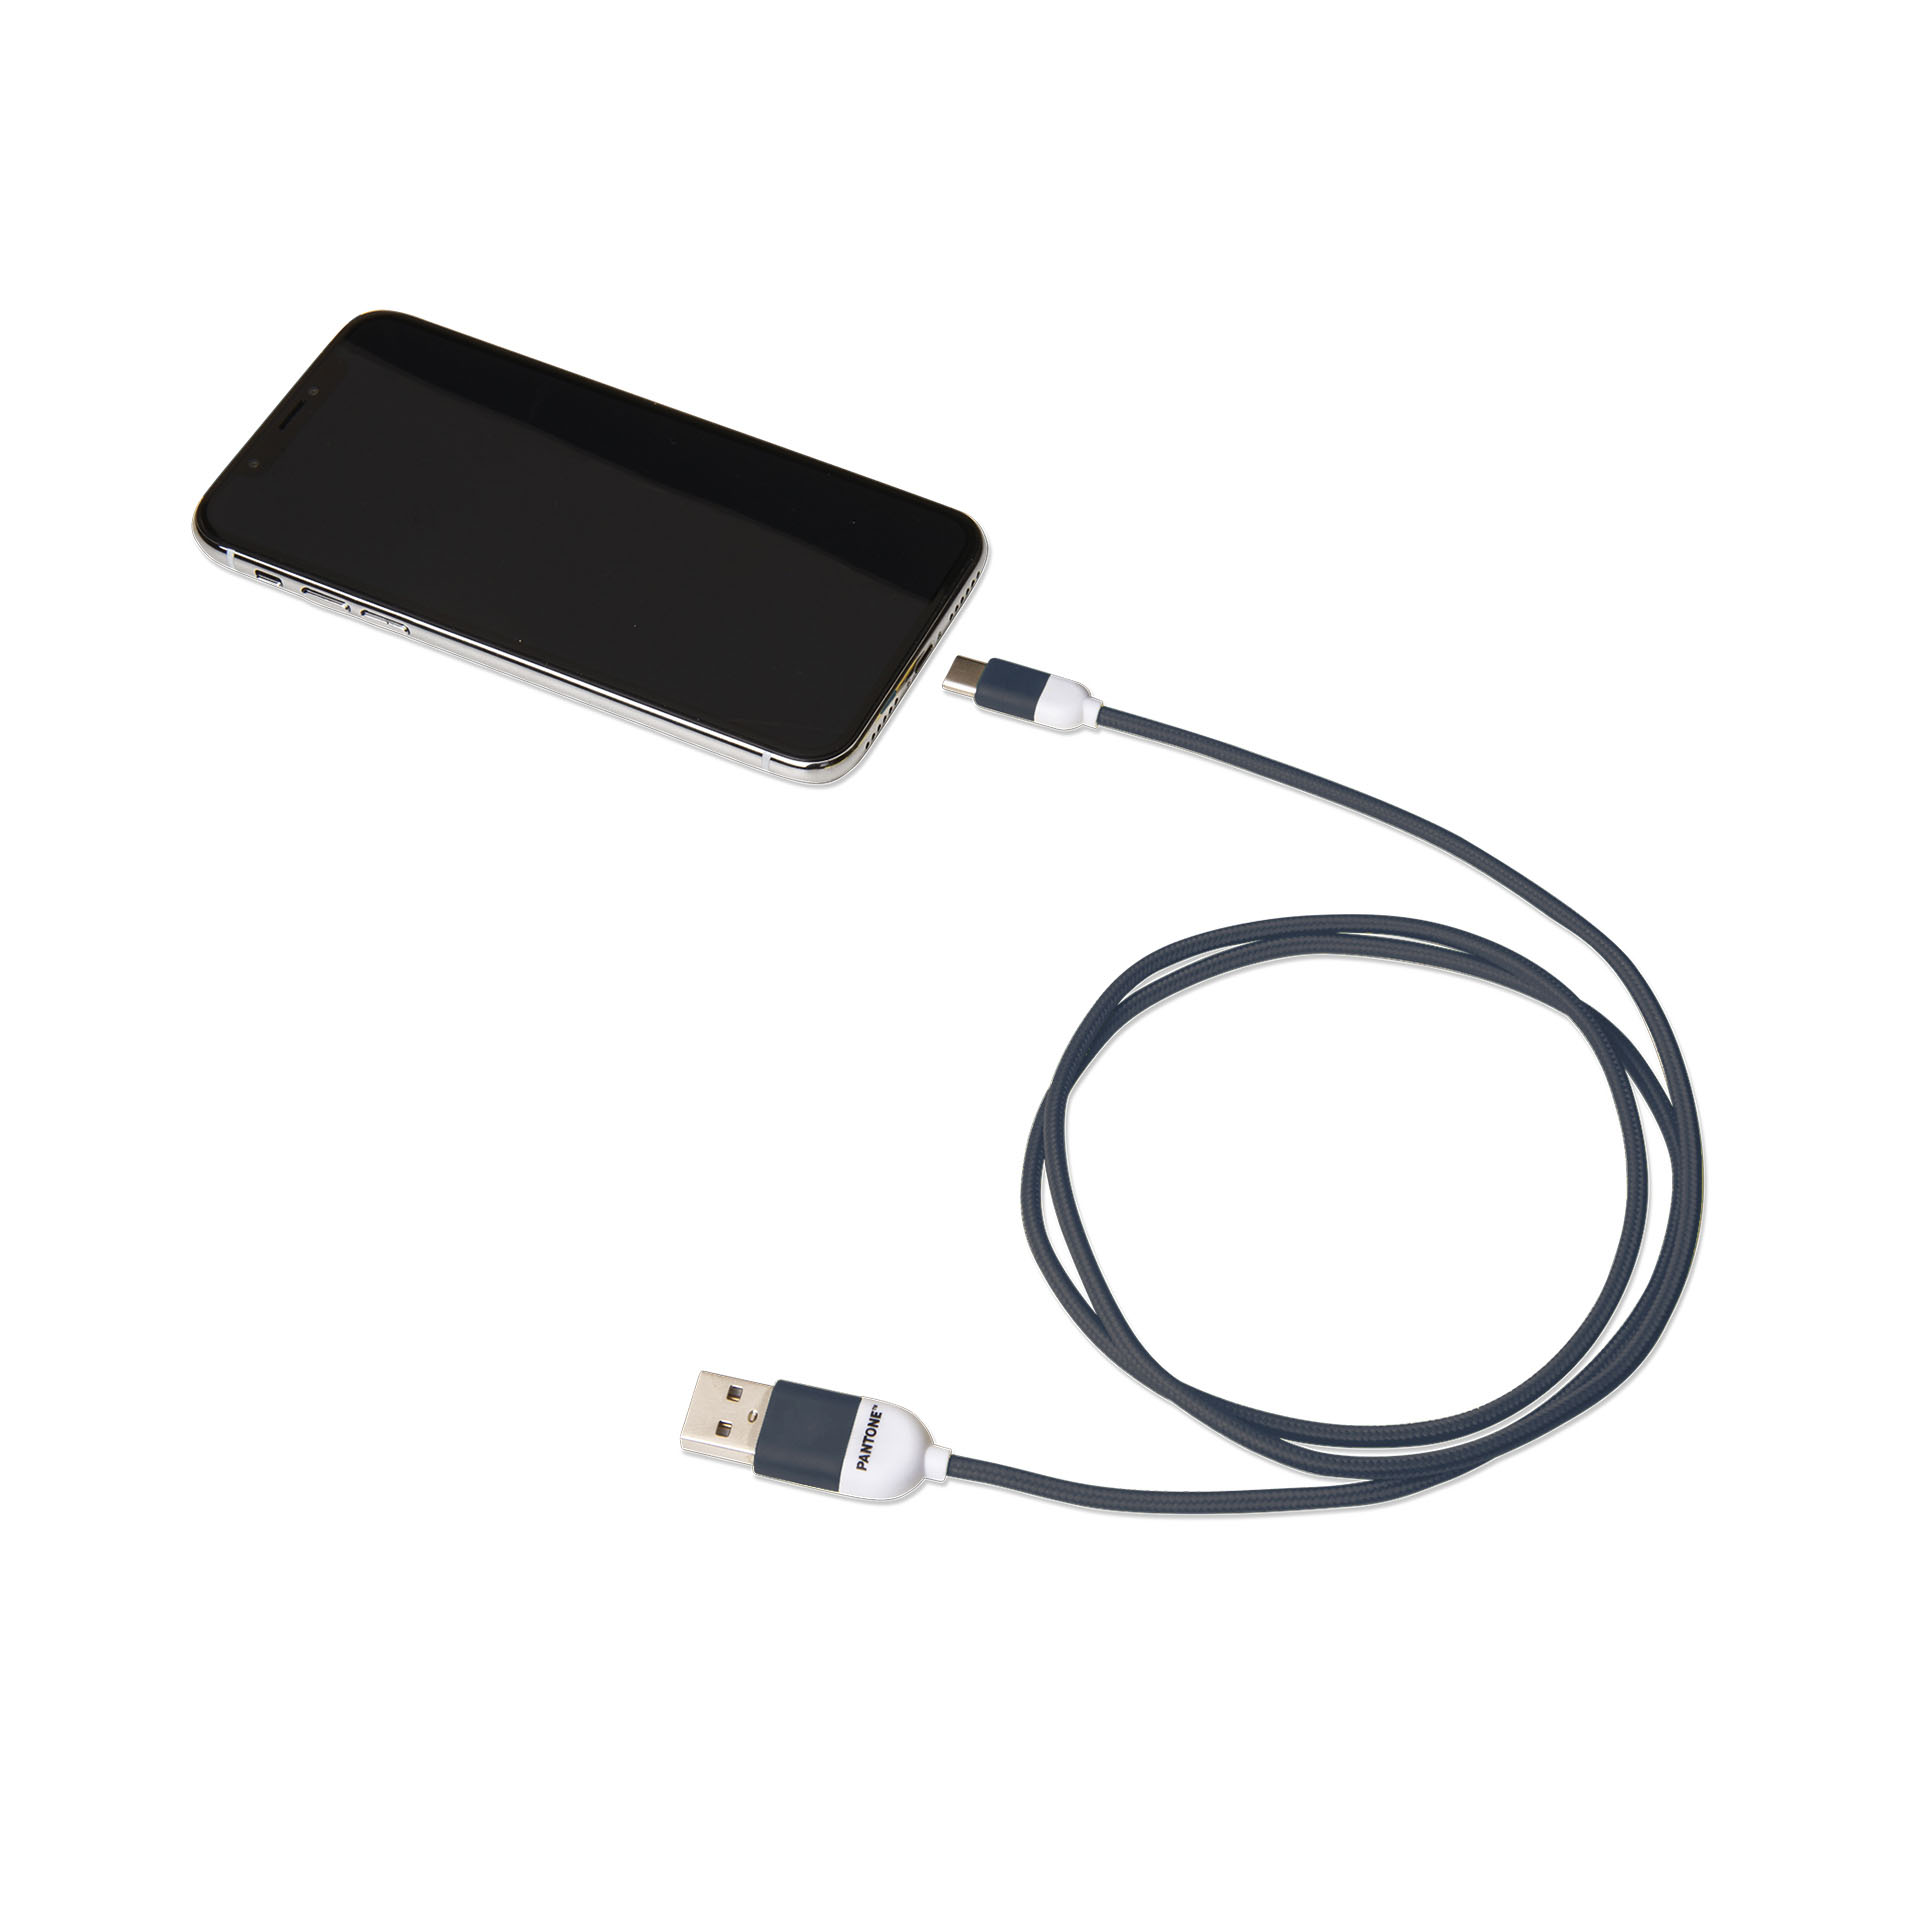 Cavo dati USB Type - C linea Pantone, , large